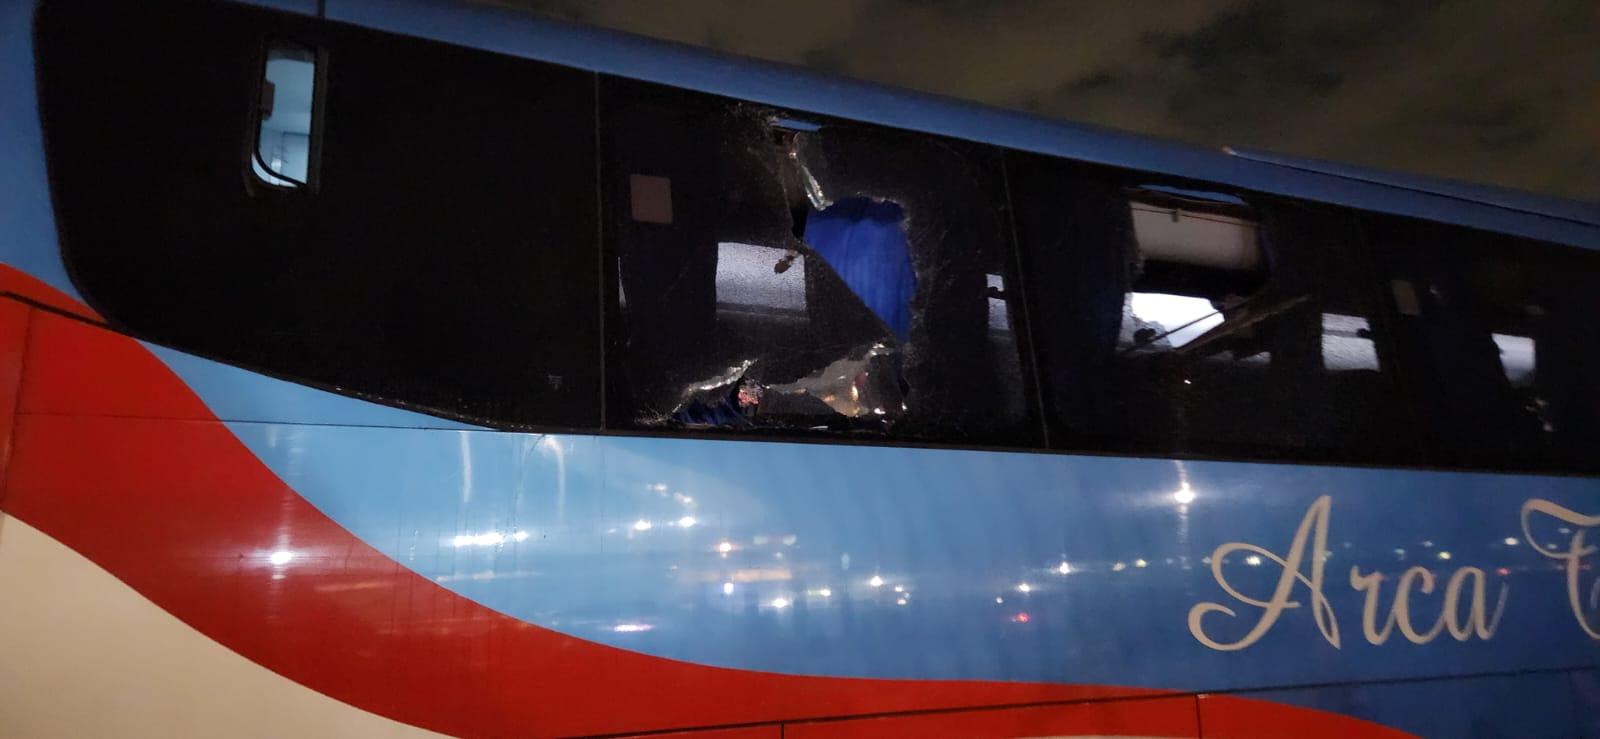 Ônibus - Torcida do Flamengo Arena Corinthians